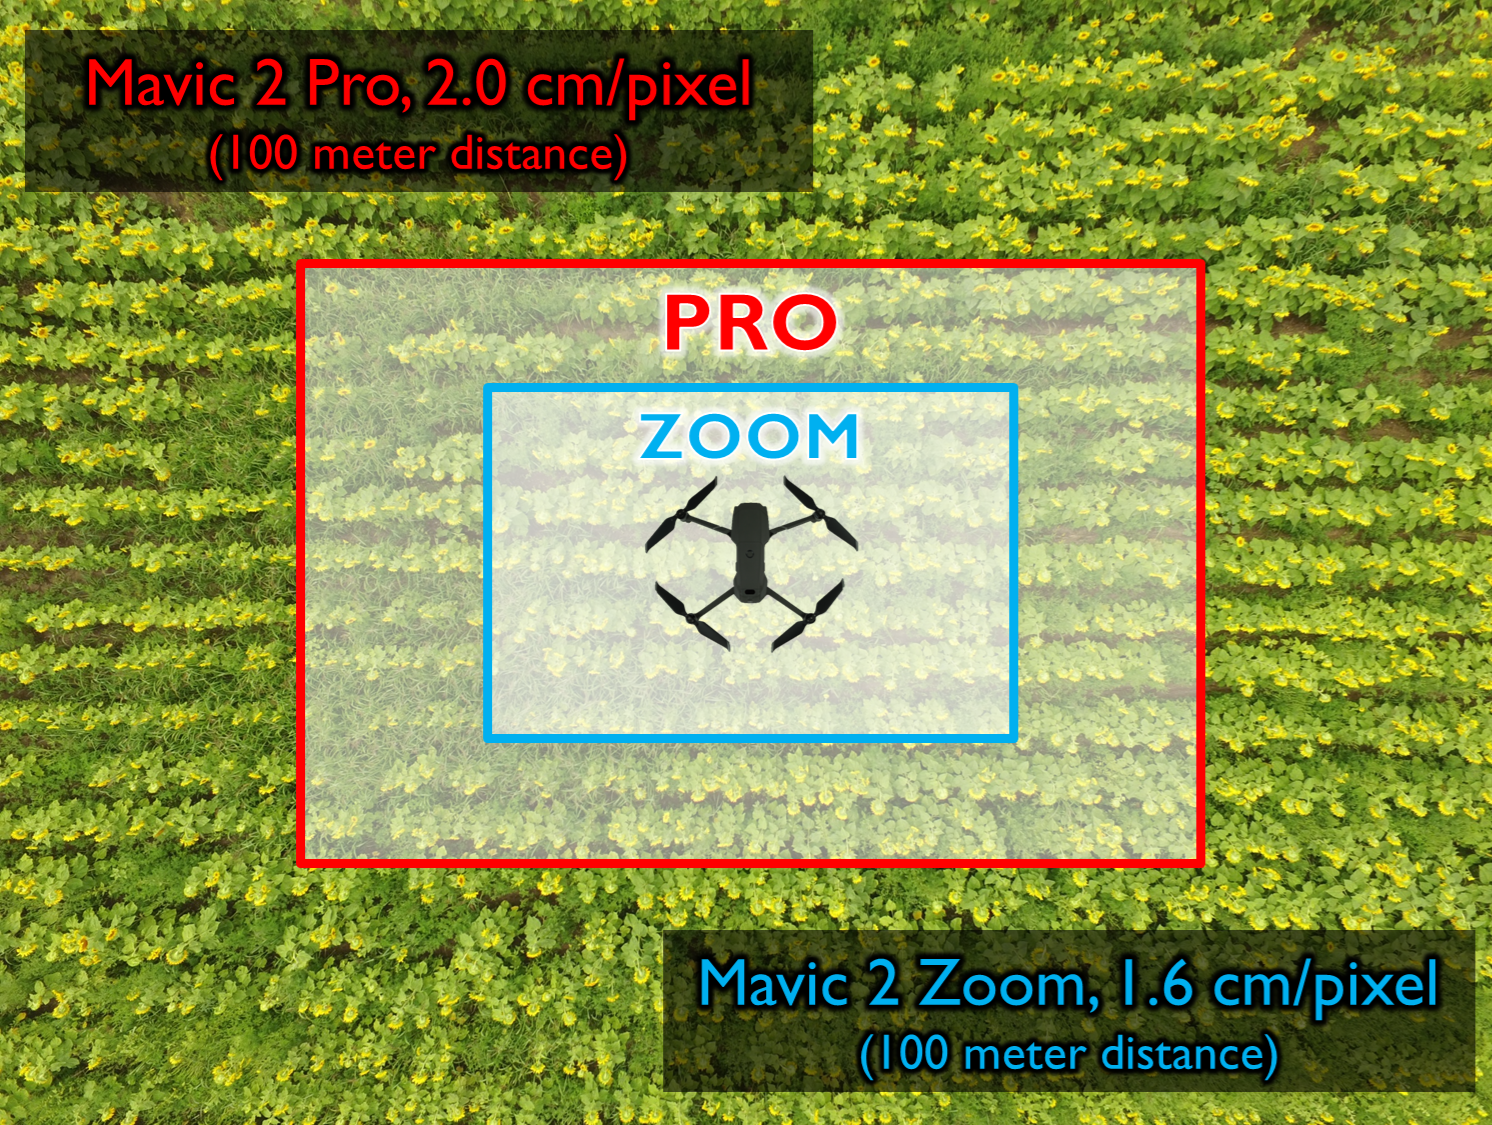 mavic 2 zoom super resolution